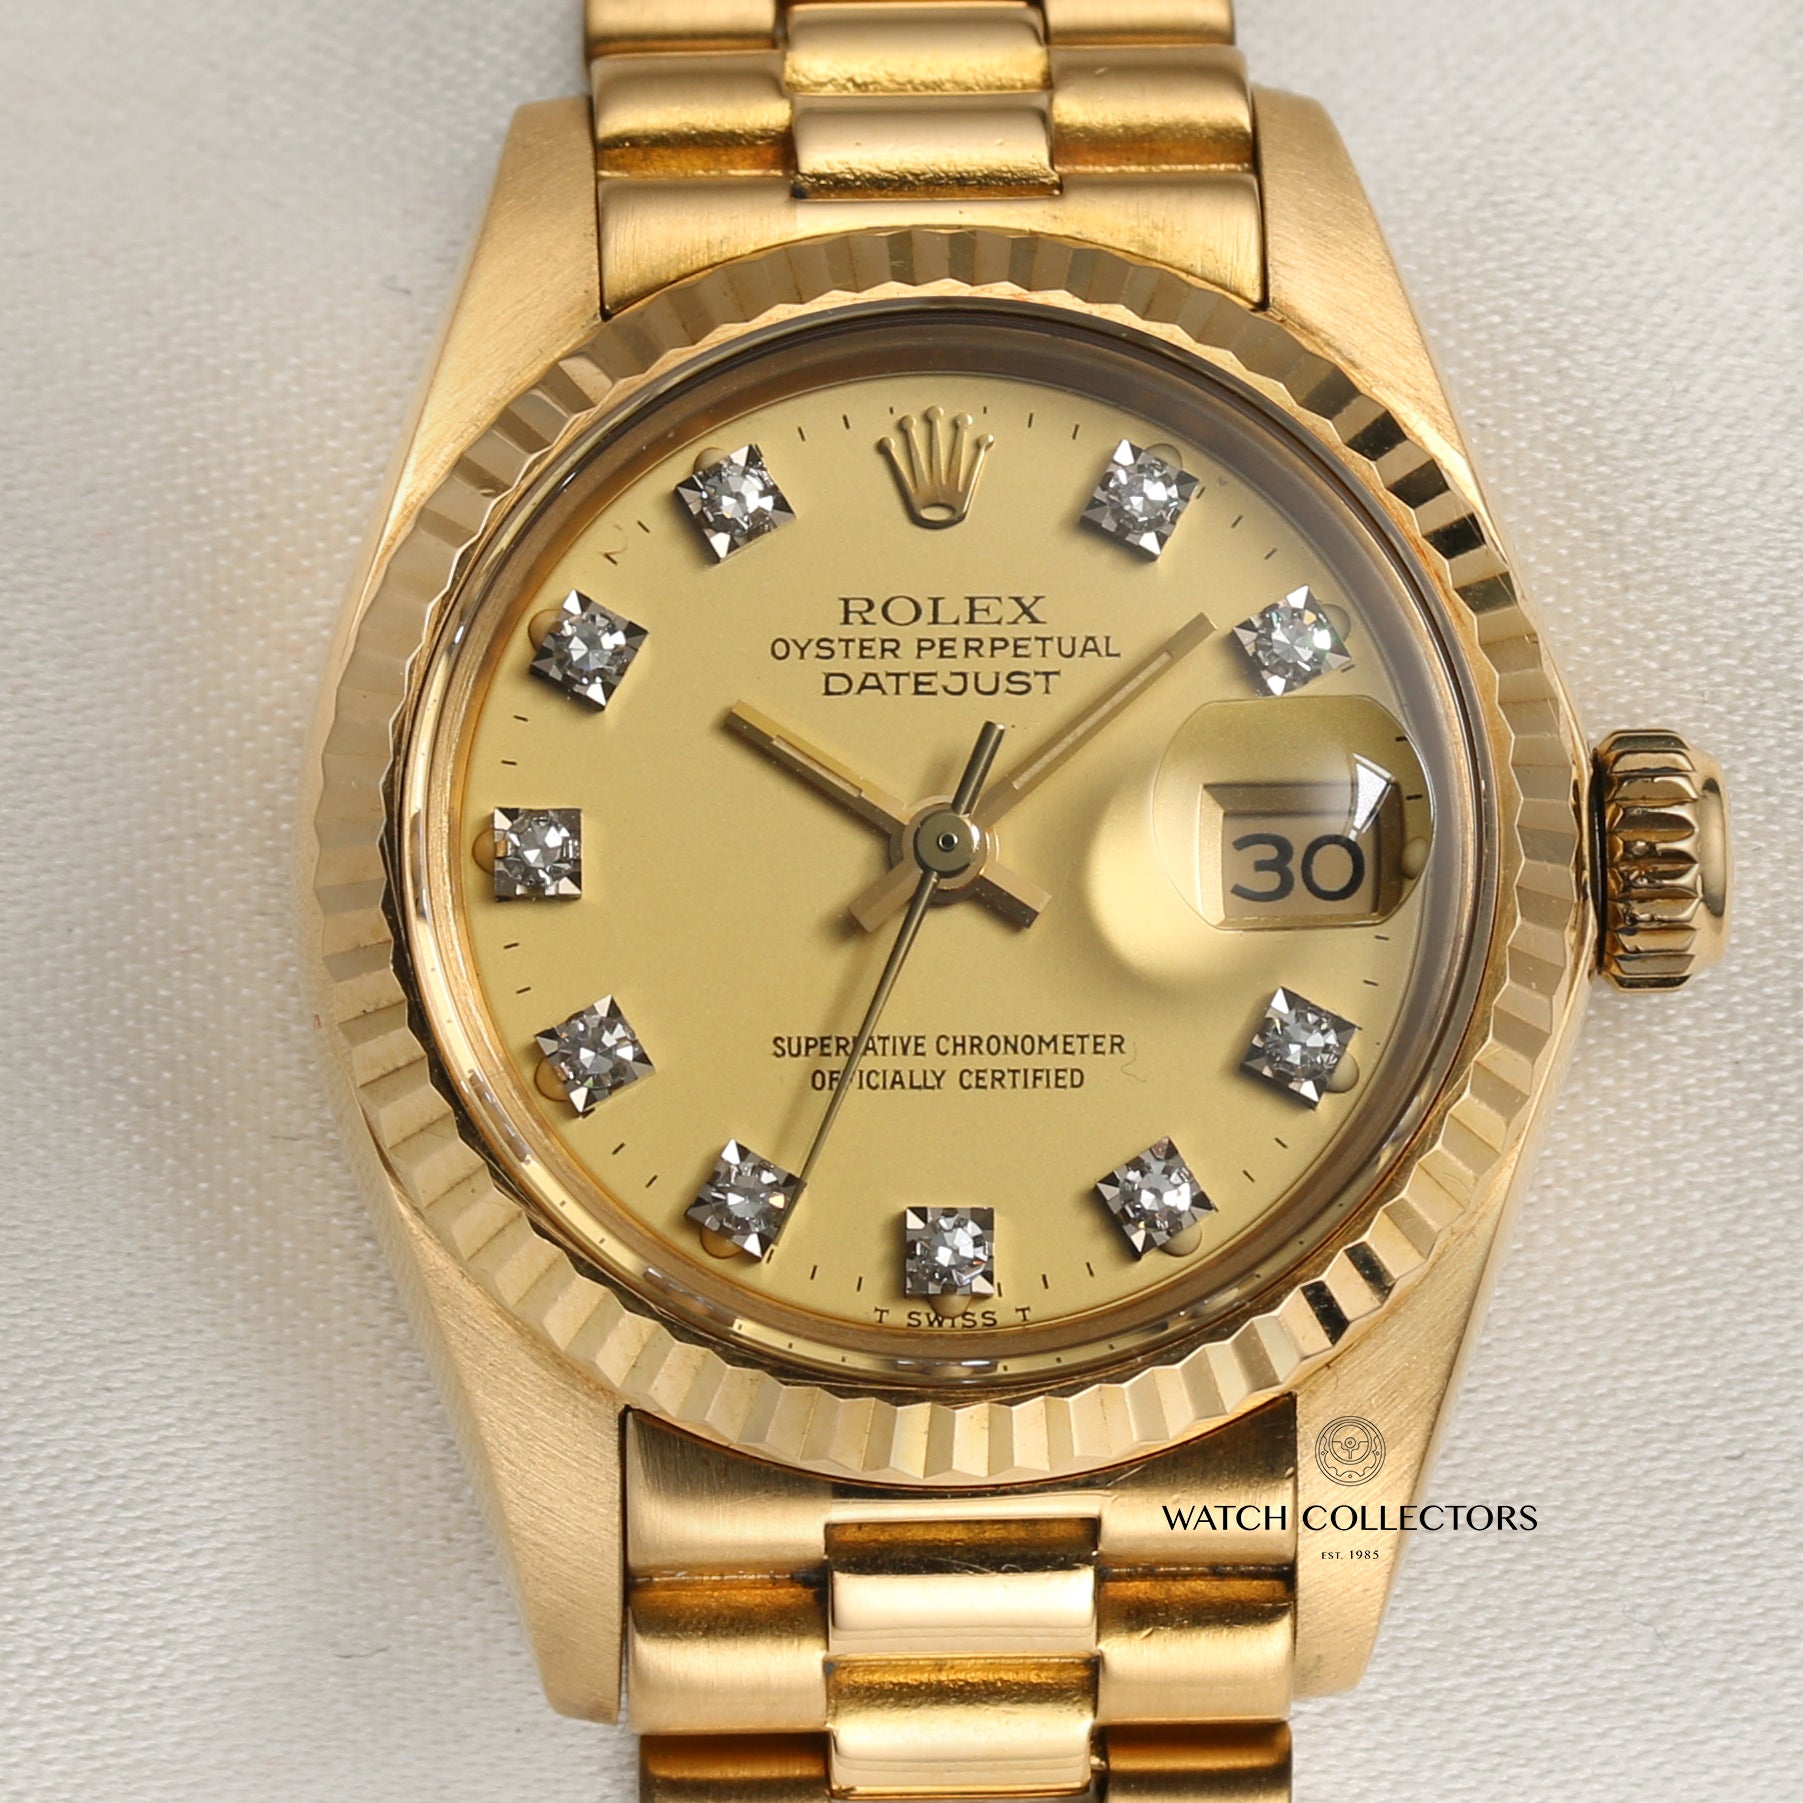 Rolex Datejust 18k Yellow Gold 6917 with Diamond Dial & Bezel